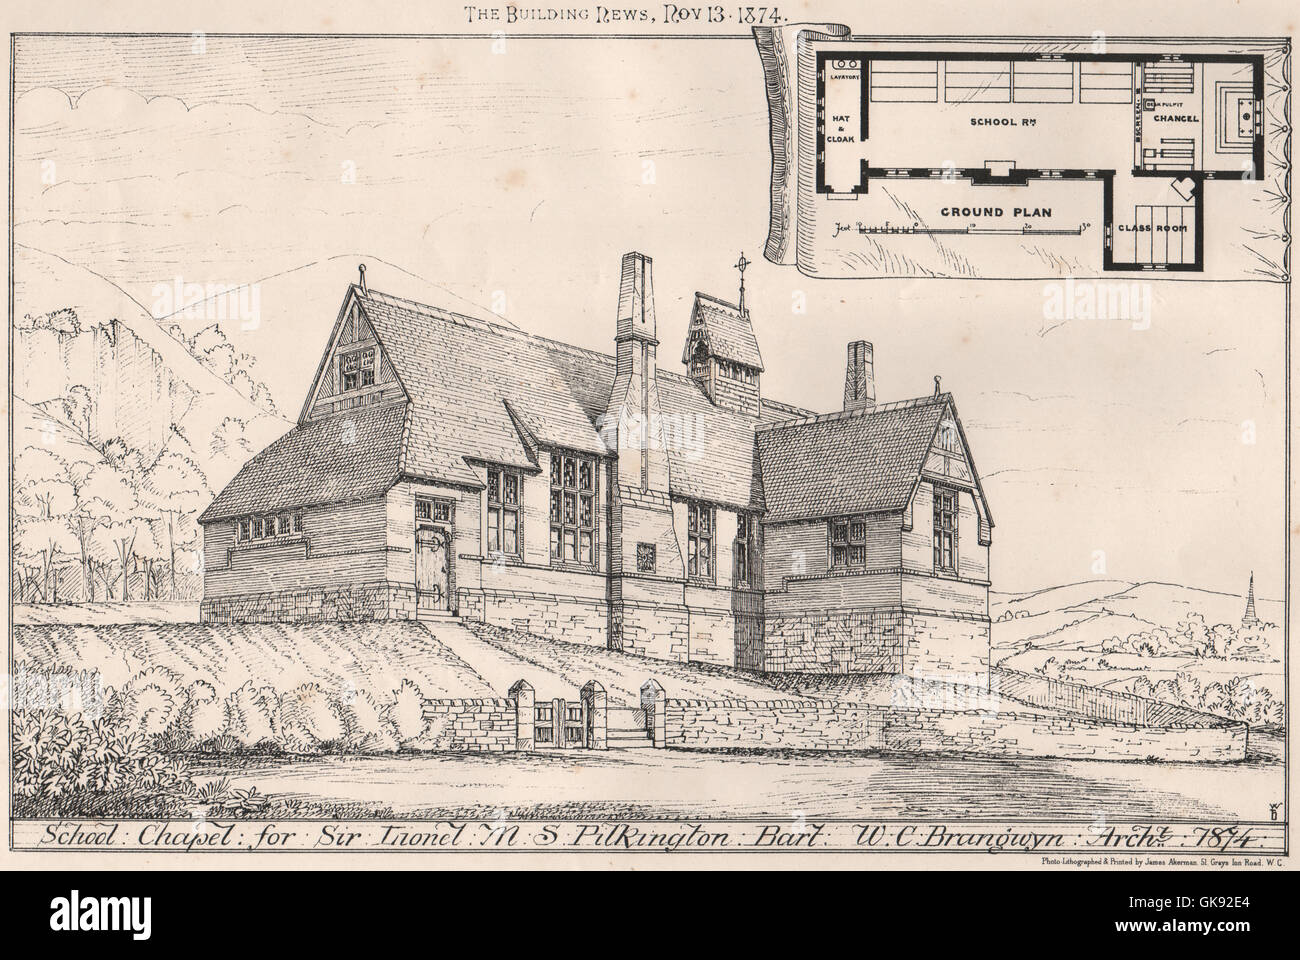 St Mary's Langsett School & Church for Sir Lionel Pilkington; W.C. Brangwyn 1874 Stock Photo